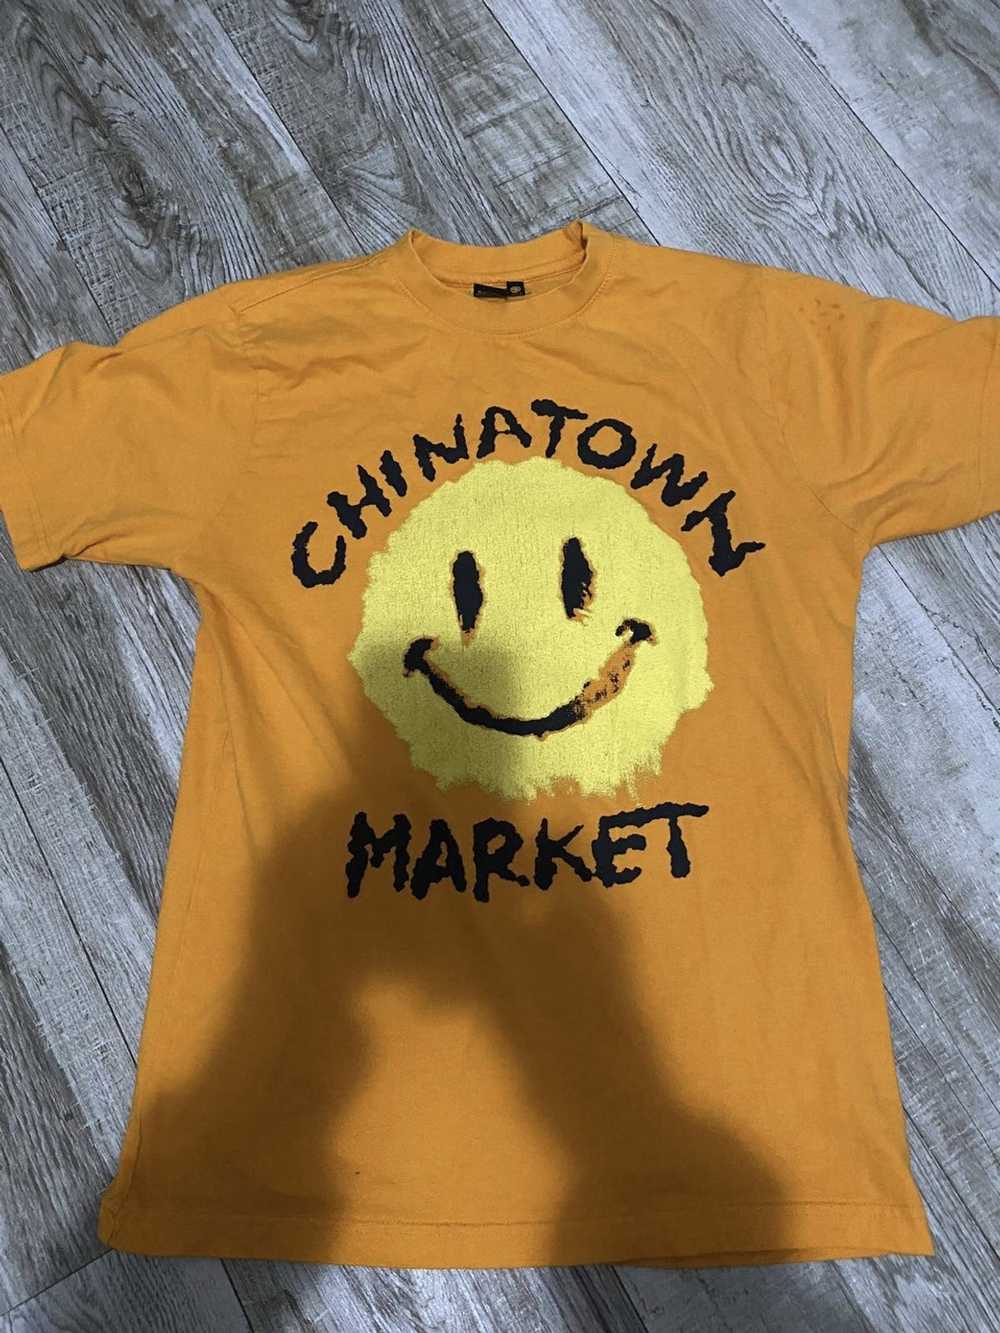 Market Chinatown market smiley tee - image 2